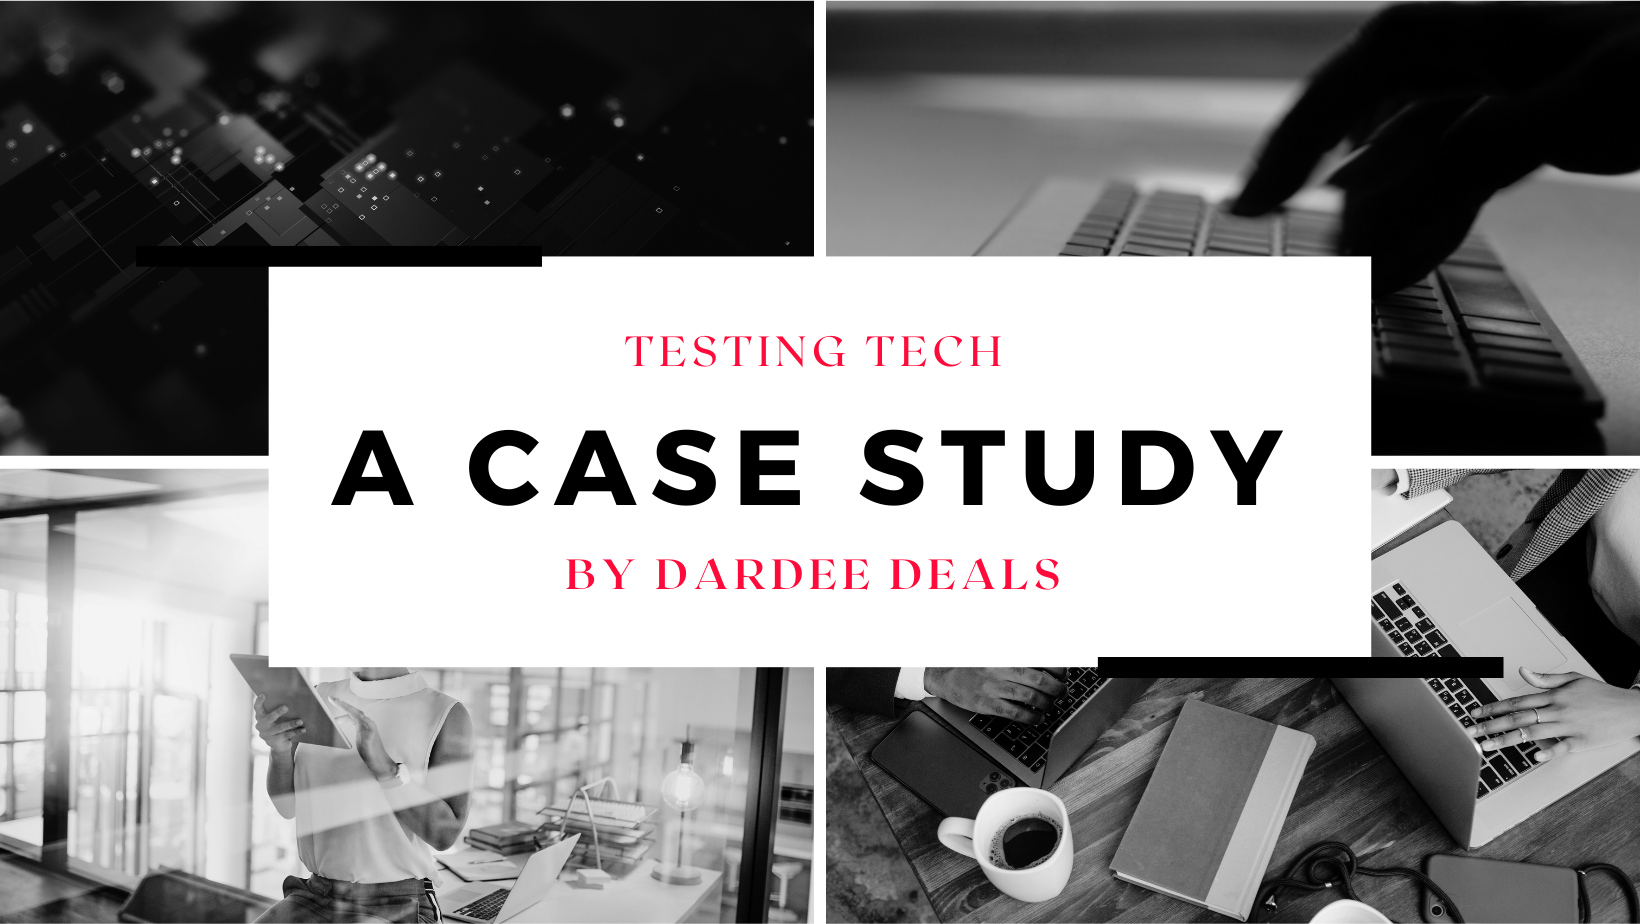 dardee deals case study beacons ai